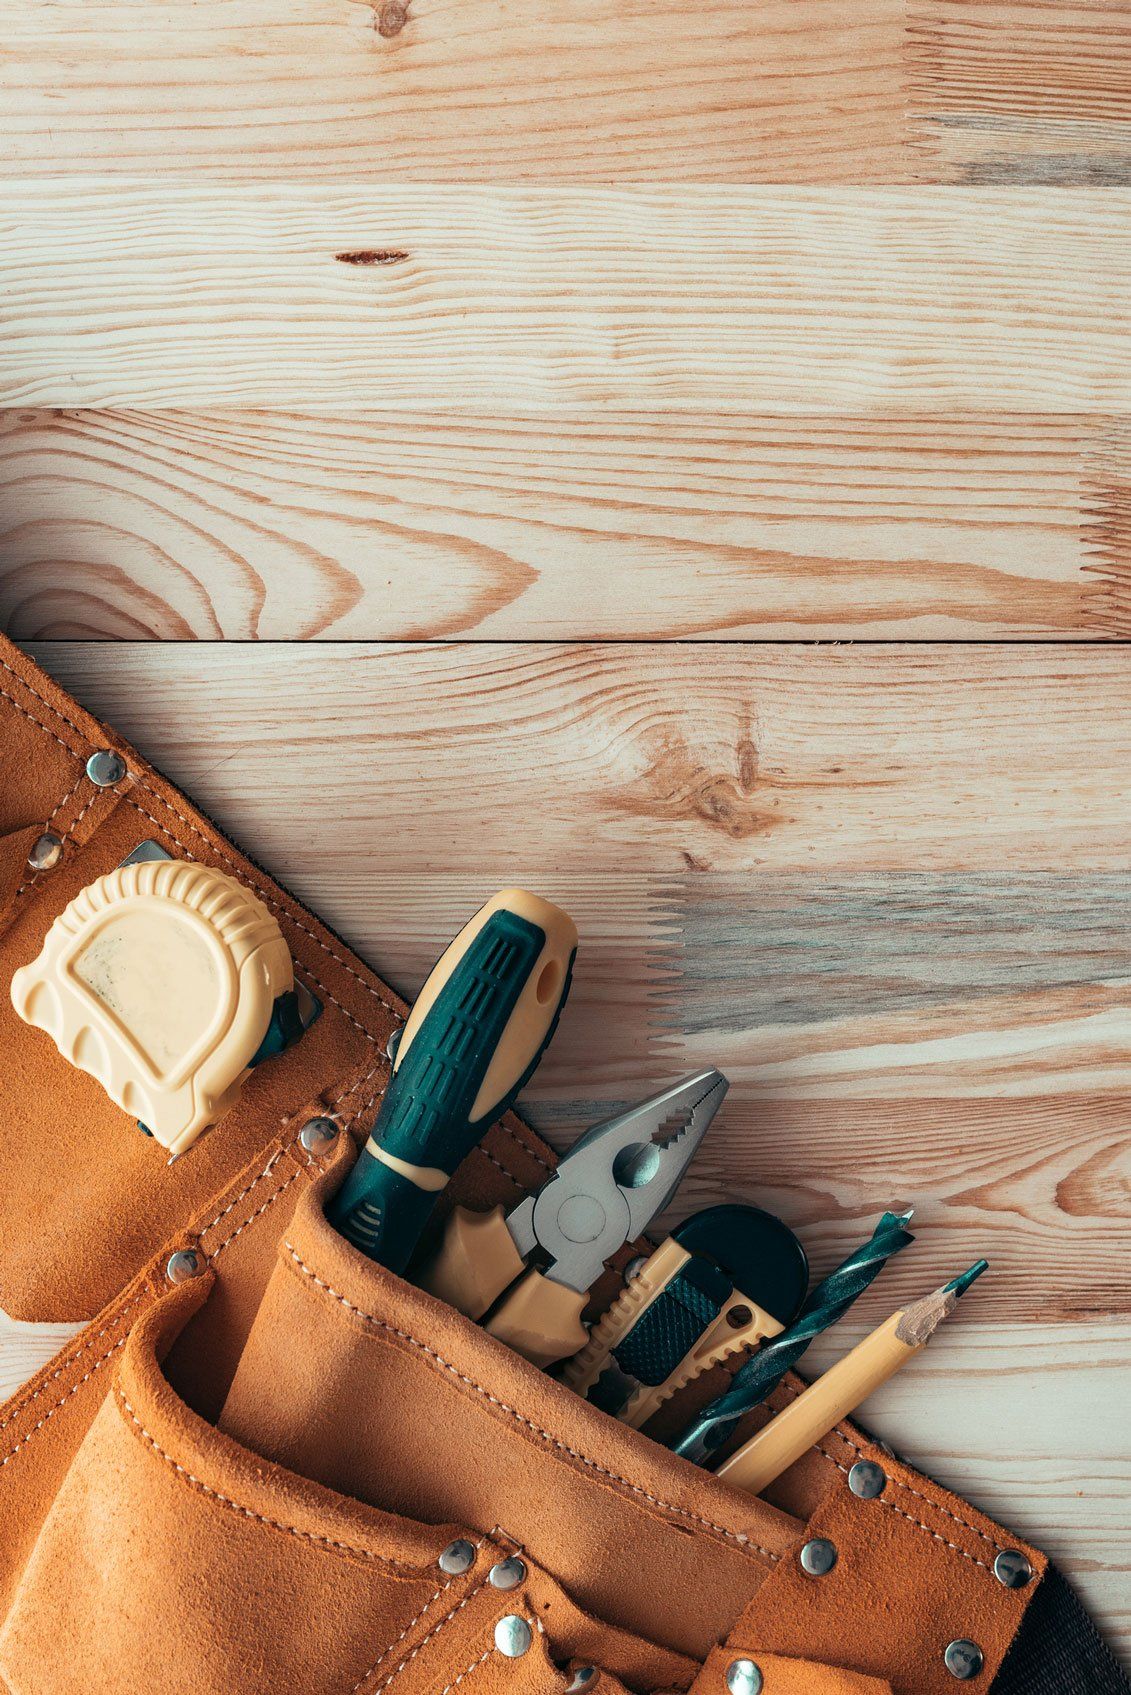 Handyman — Carpentry Tool Belt on Woodwork in Davenport, IA